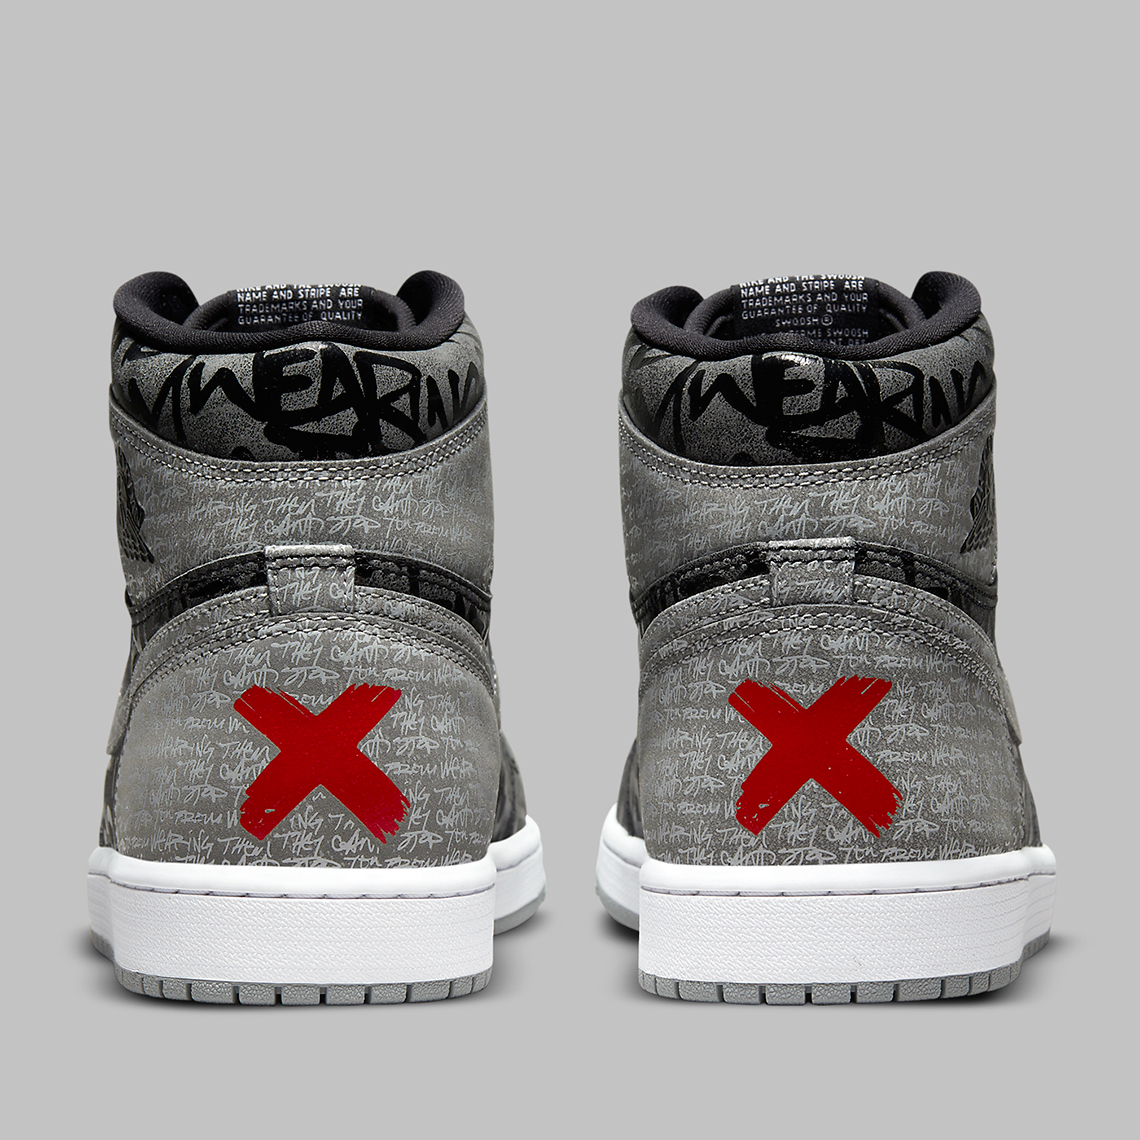 Nike Air Jordan XX9 Playoff Pack Black